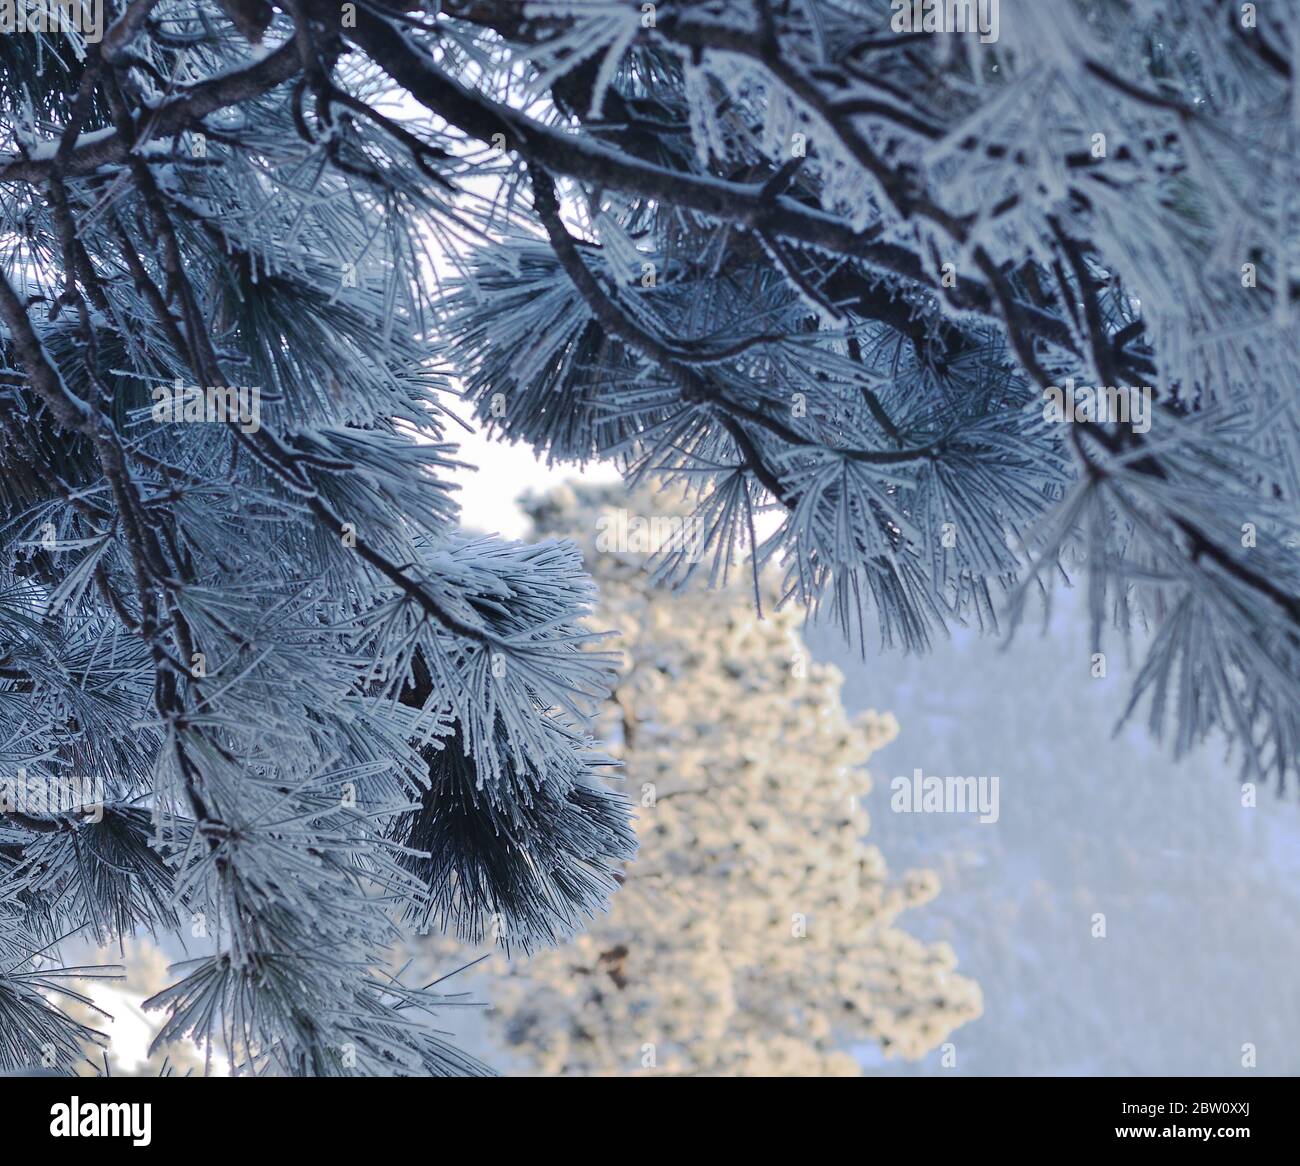 Winter scene with ponderosa pine boughs, Colorado. Stock Photo